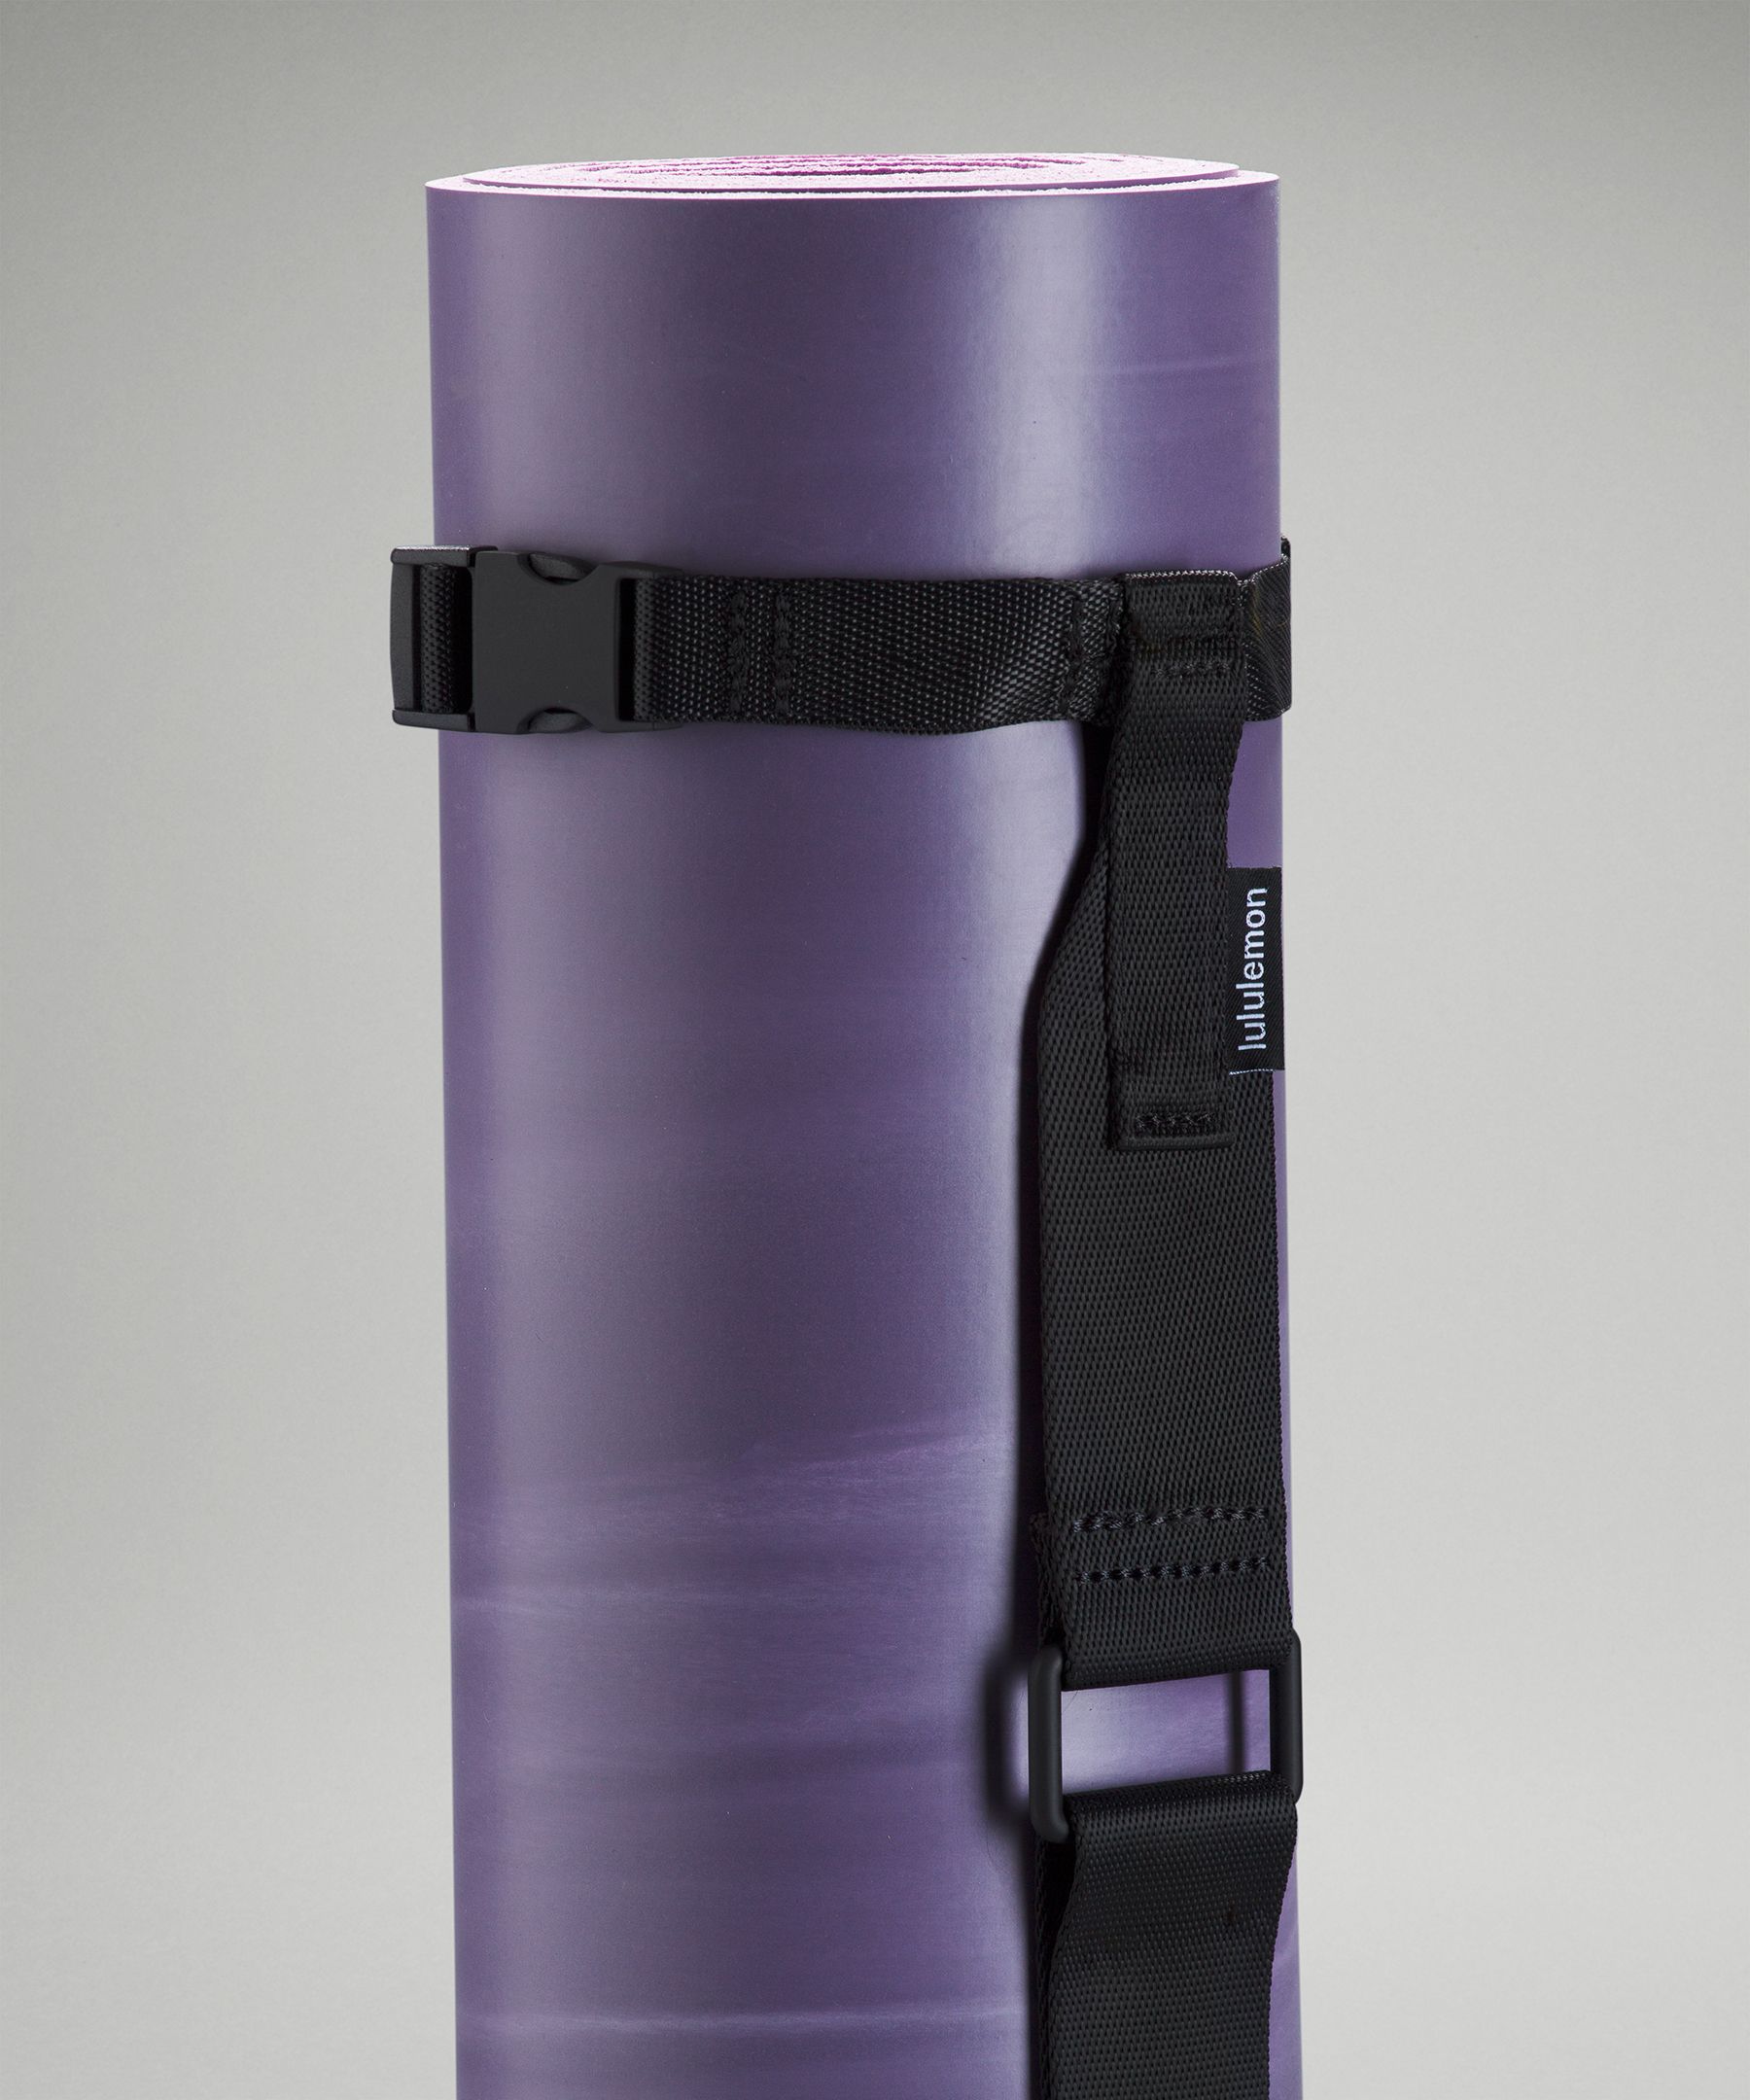 Buy Vaquita Adjustable Yoga Mat Strap, Sling Belt for Carrying & Holding  Mat